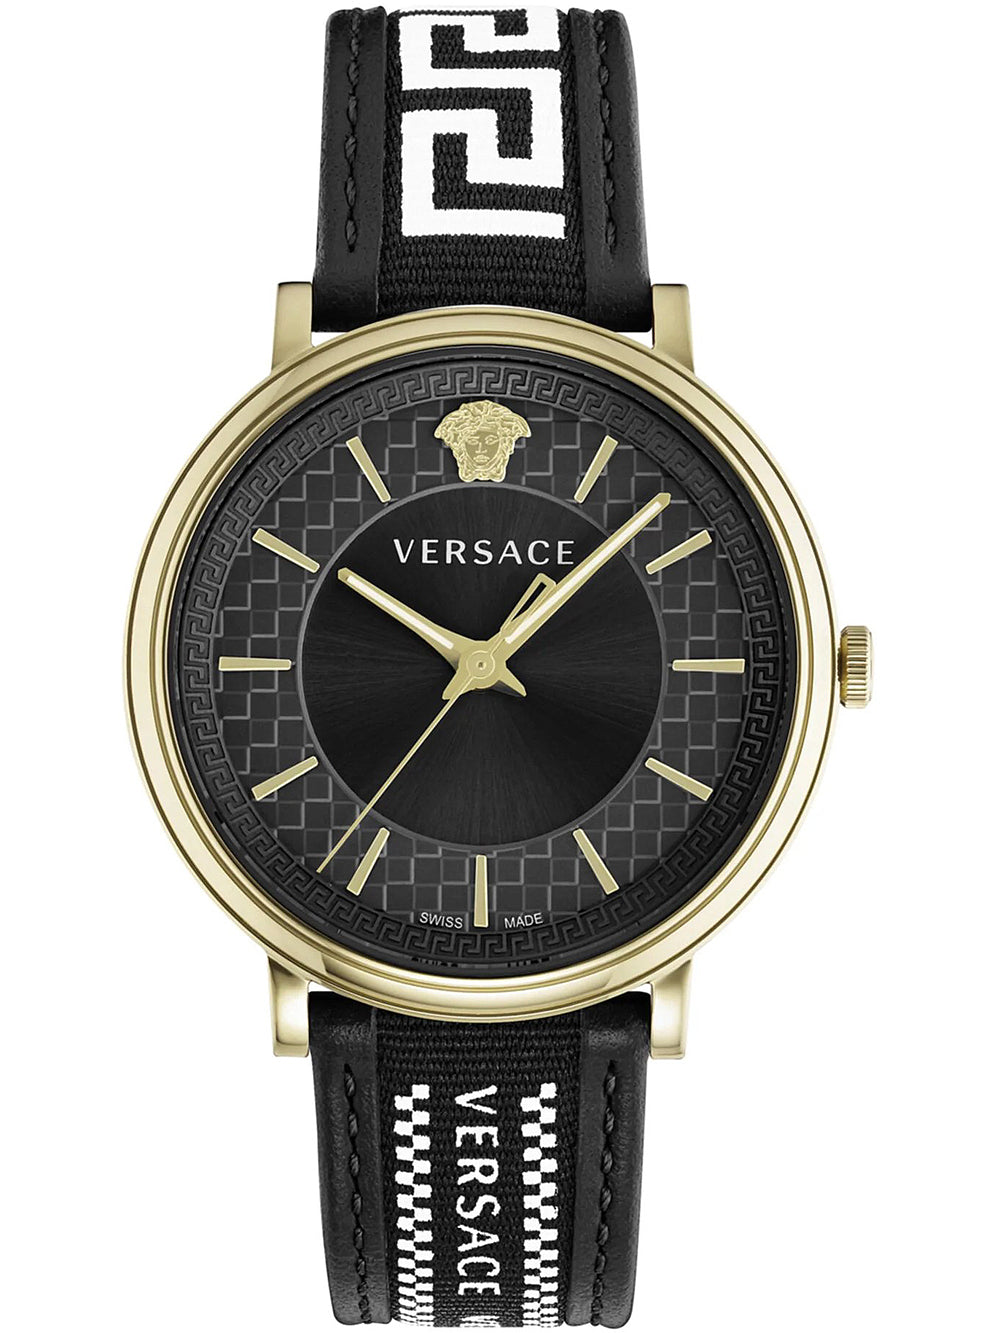 Versace Men's Watch V-Circle Black Gold VE5A01921